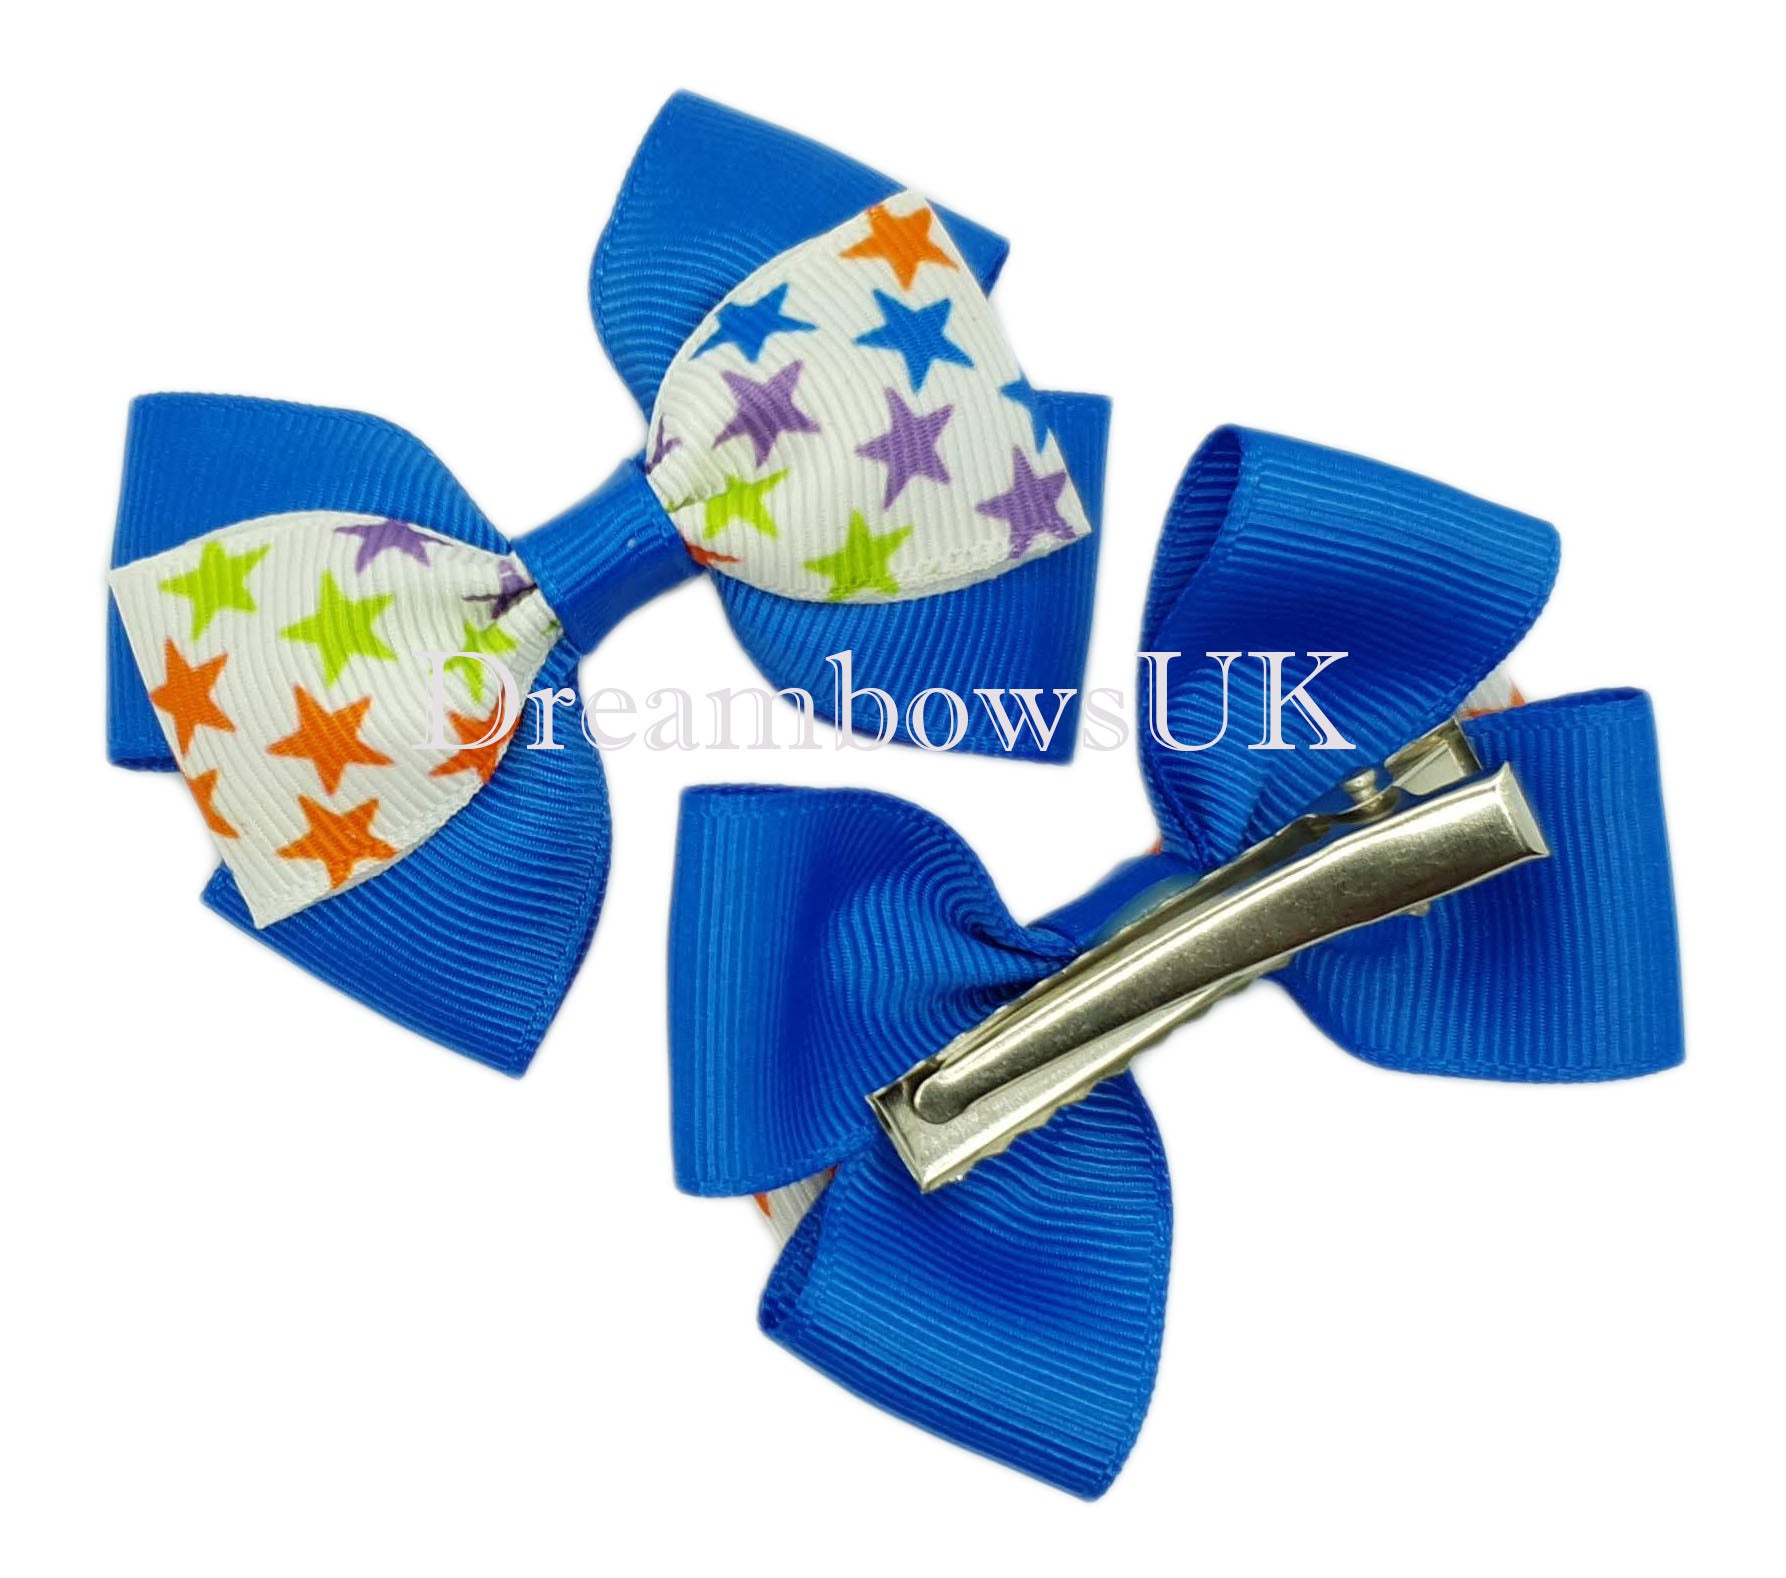 Royal blue hair bows on alligator clips